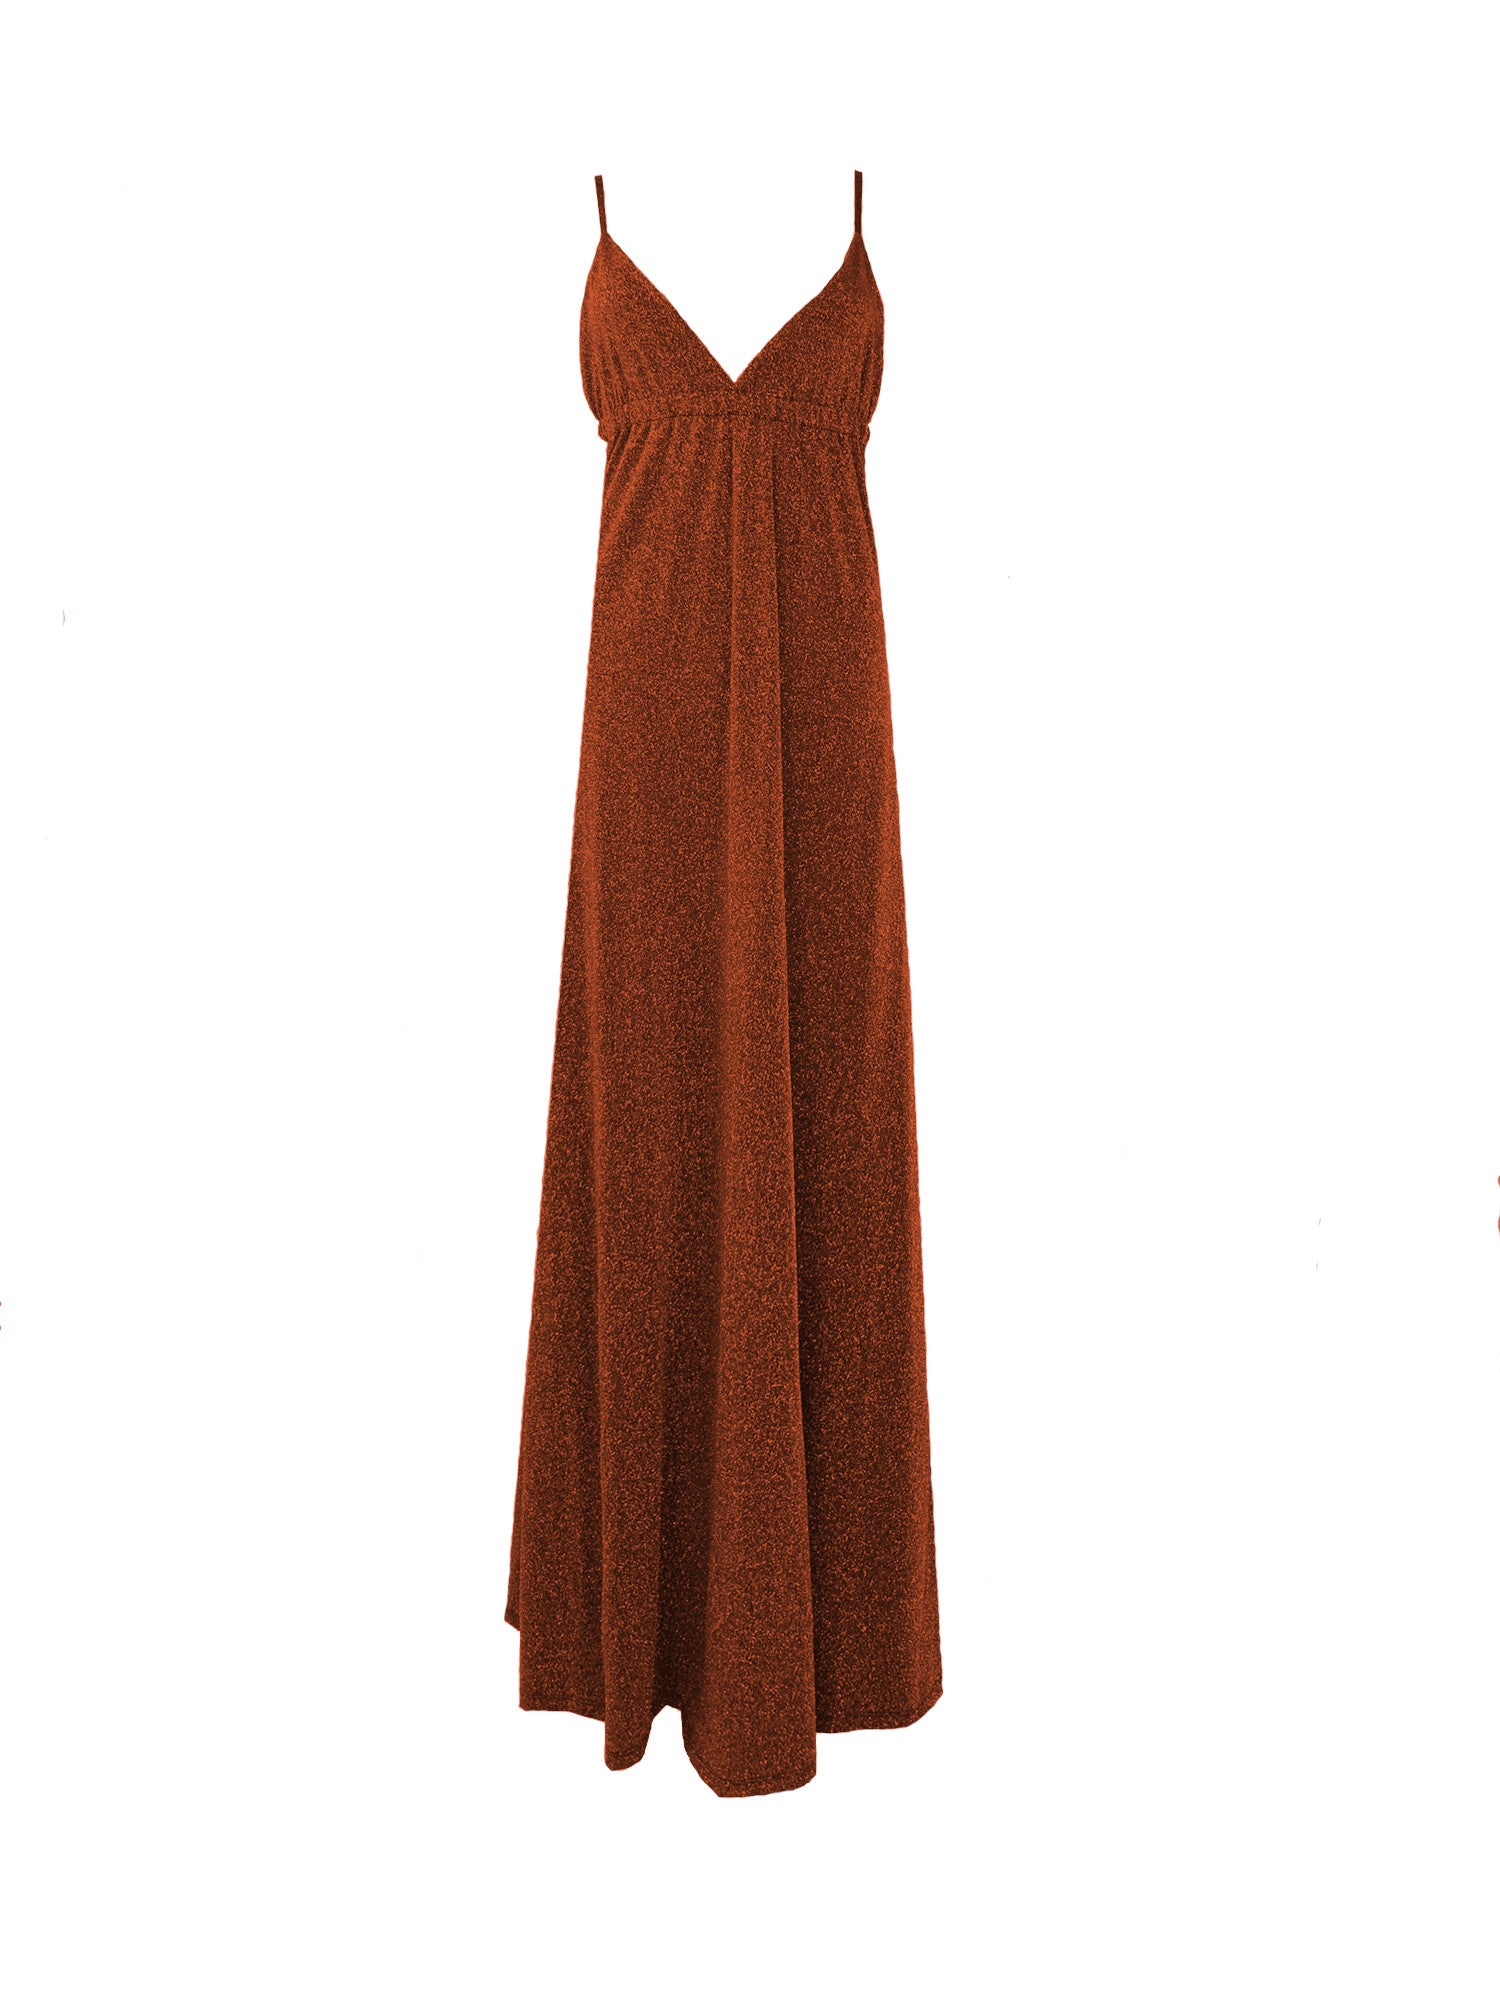 MICOL - long bronze lurex dress